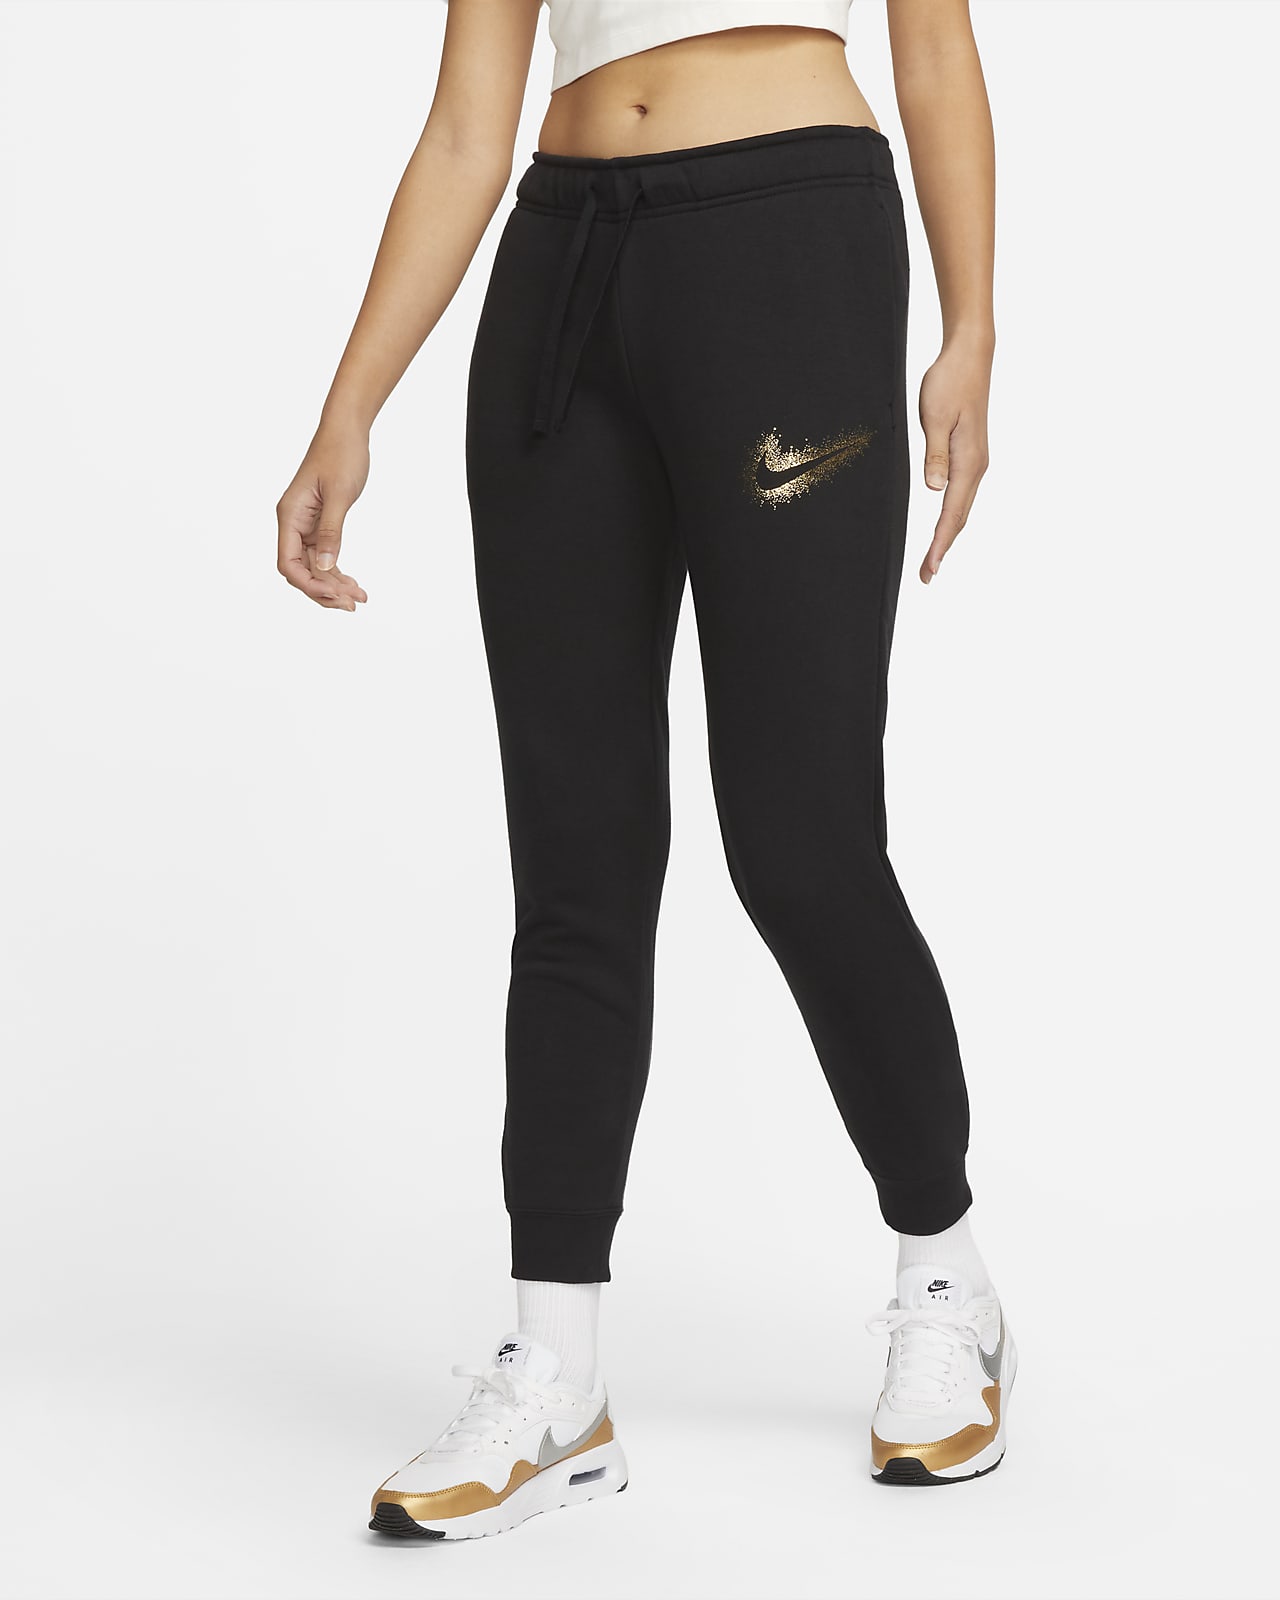 Nike, Air Women's Joggers, White